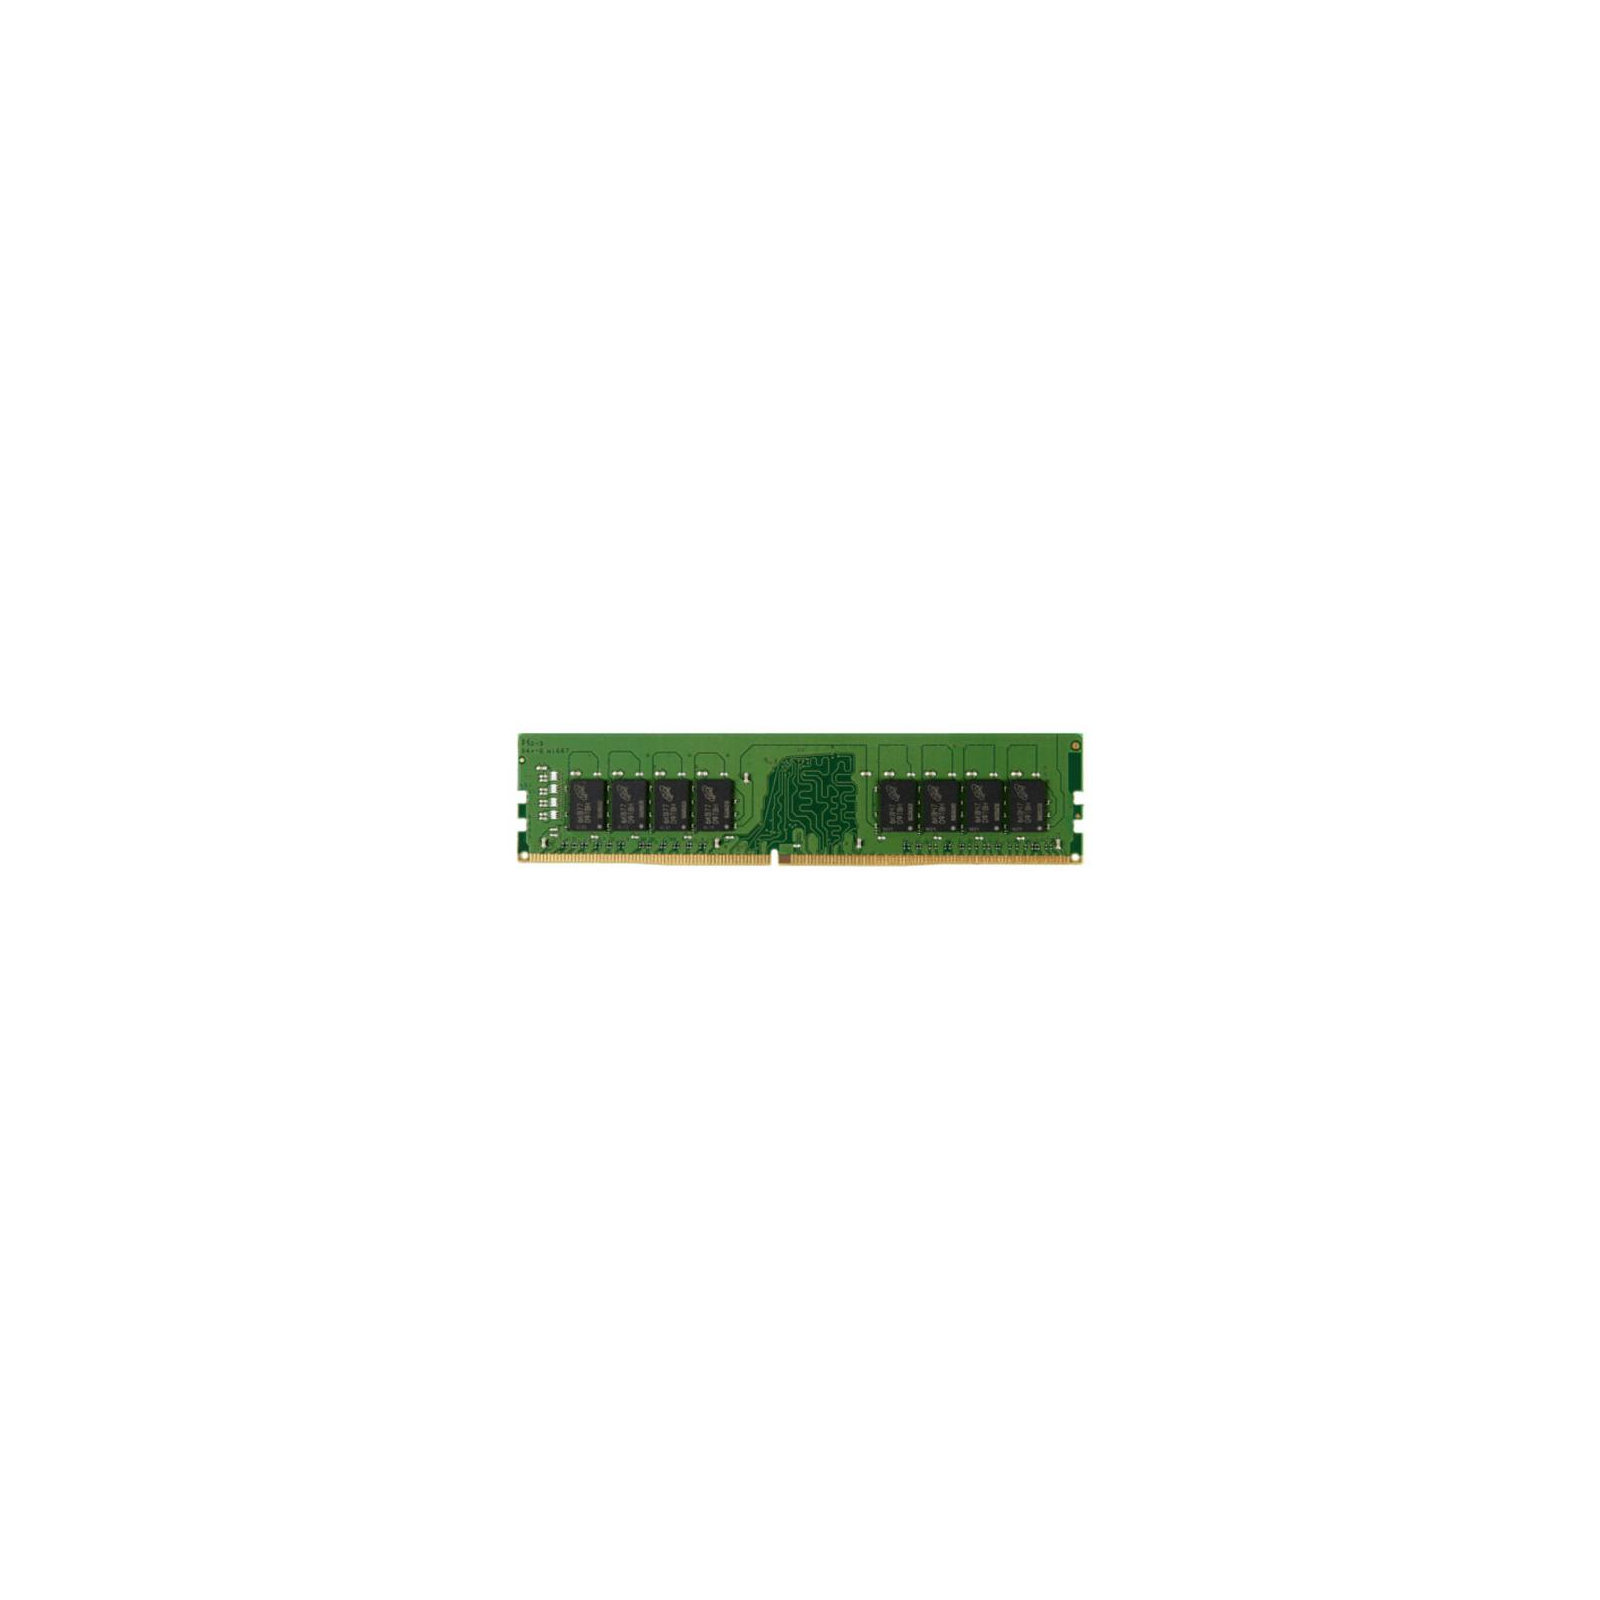 Модуль памяти для компьютера DDR4 4GB 2666 MHz ValueRAM Kingston (KVR26N19S6/4)